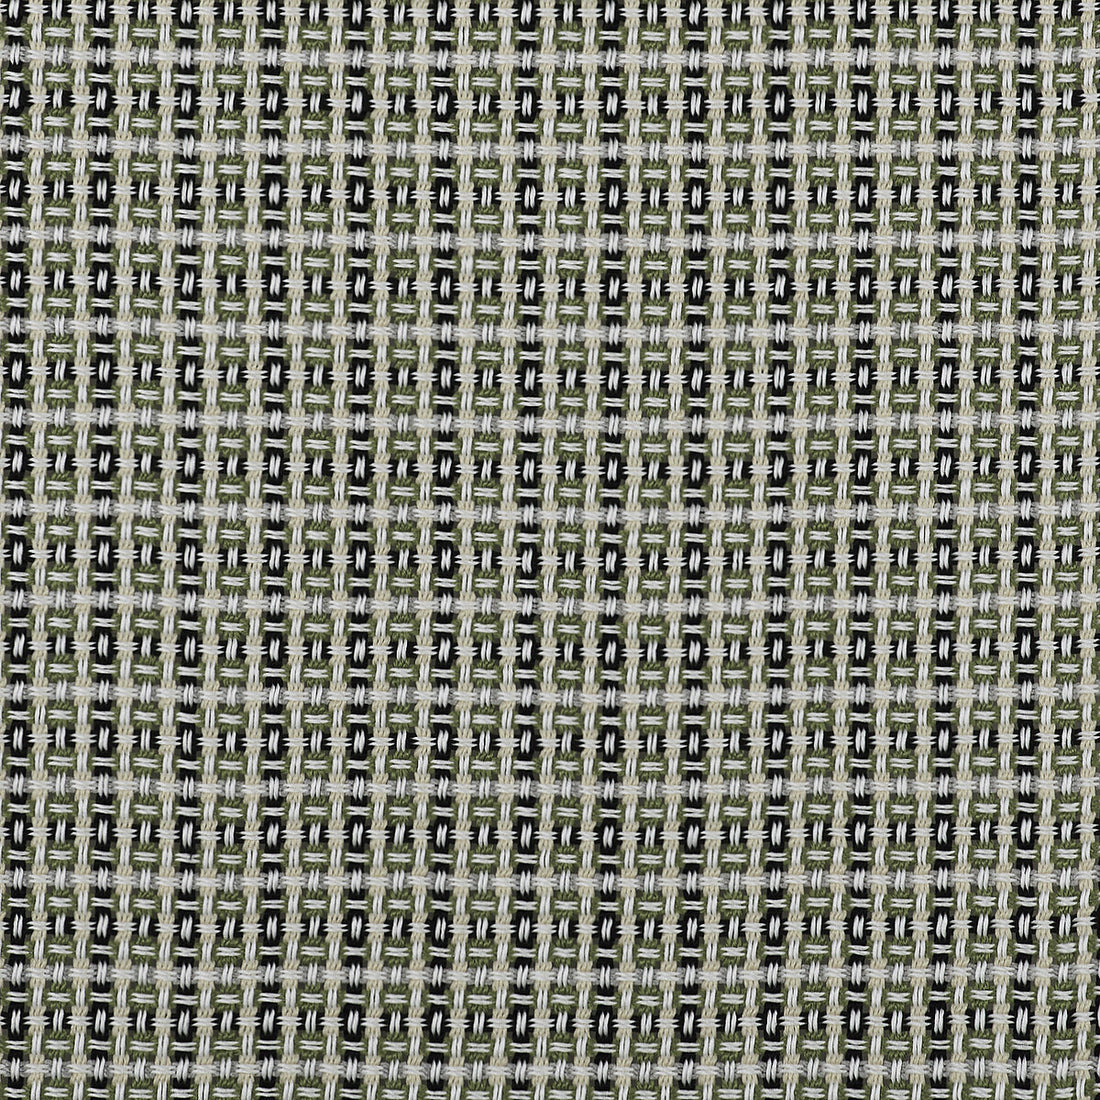 Kf Gyd fabric - pattern LCT1006.003.0 - by Gaston y Daniela in the Lorenzo Castillo V collection